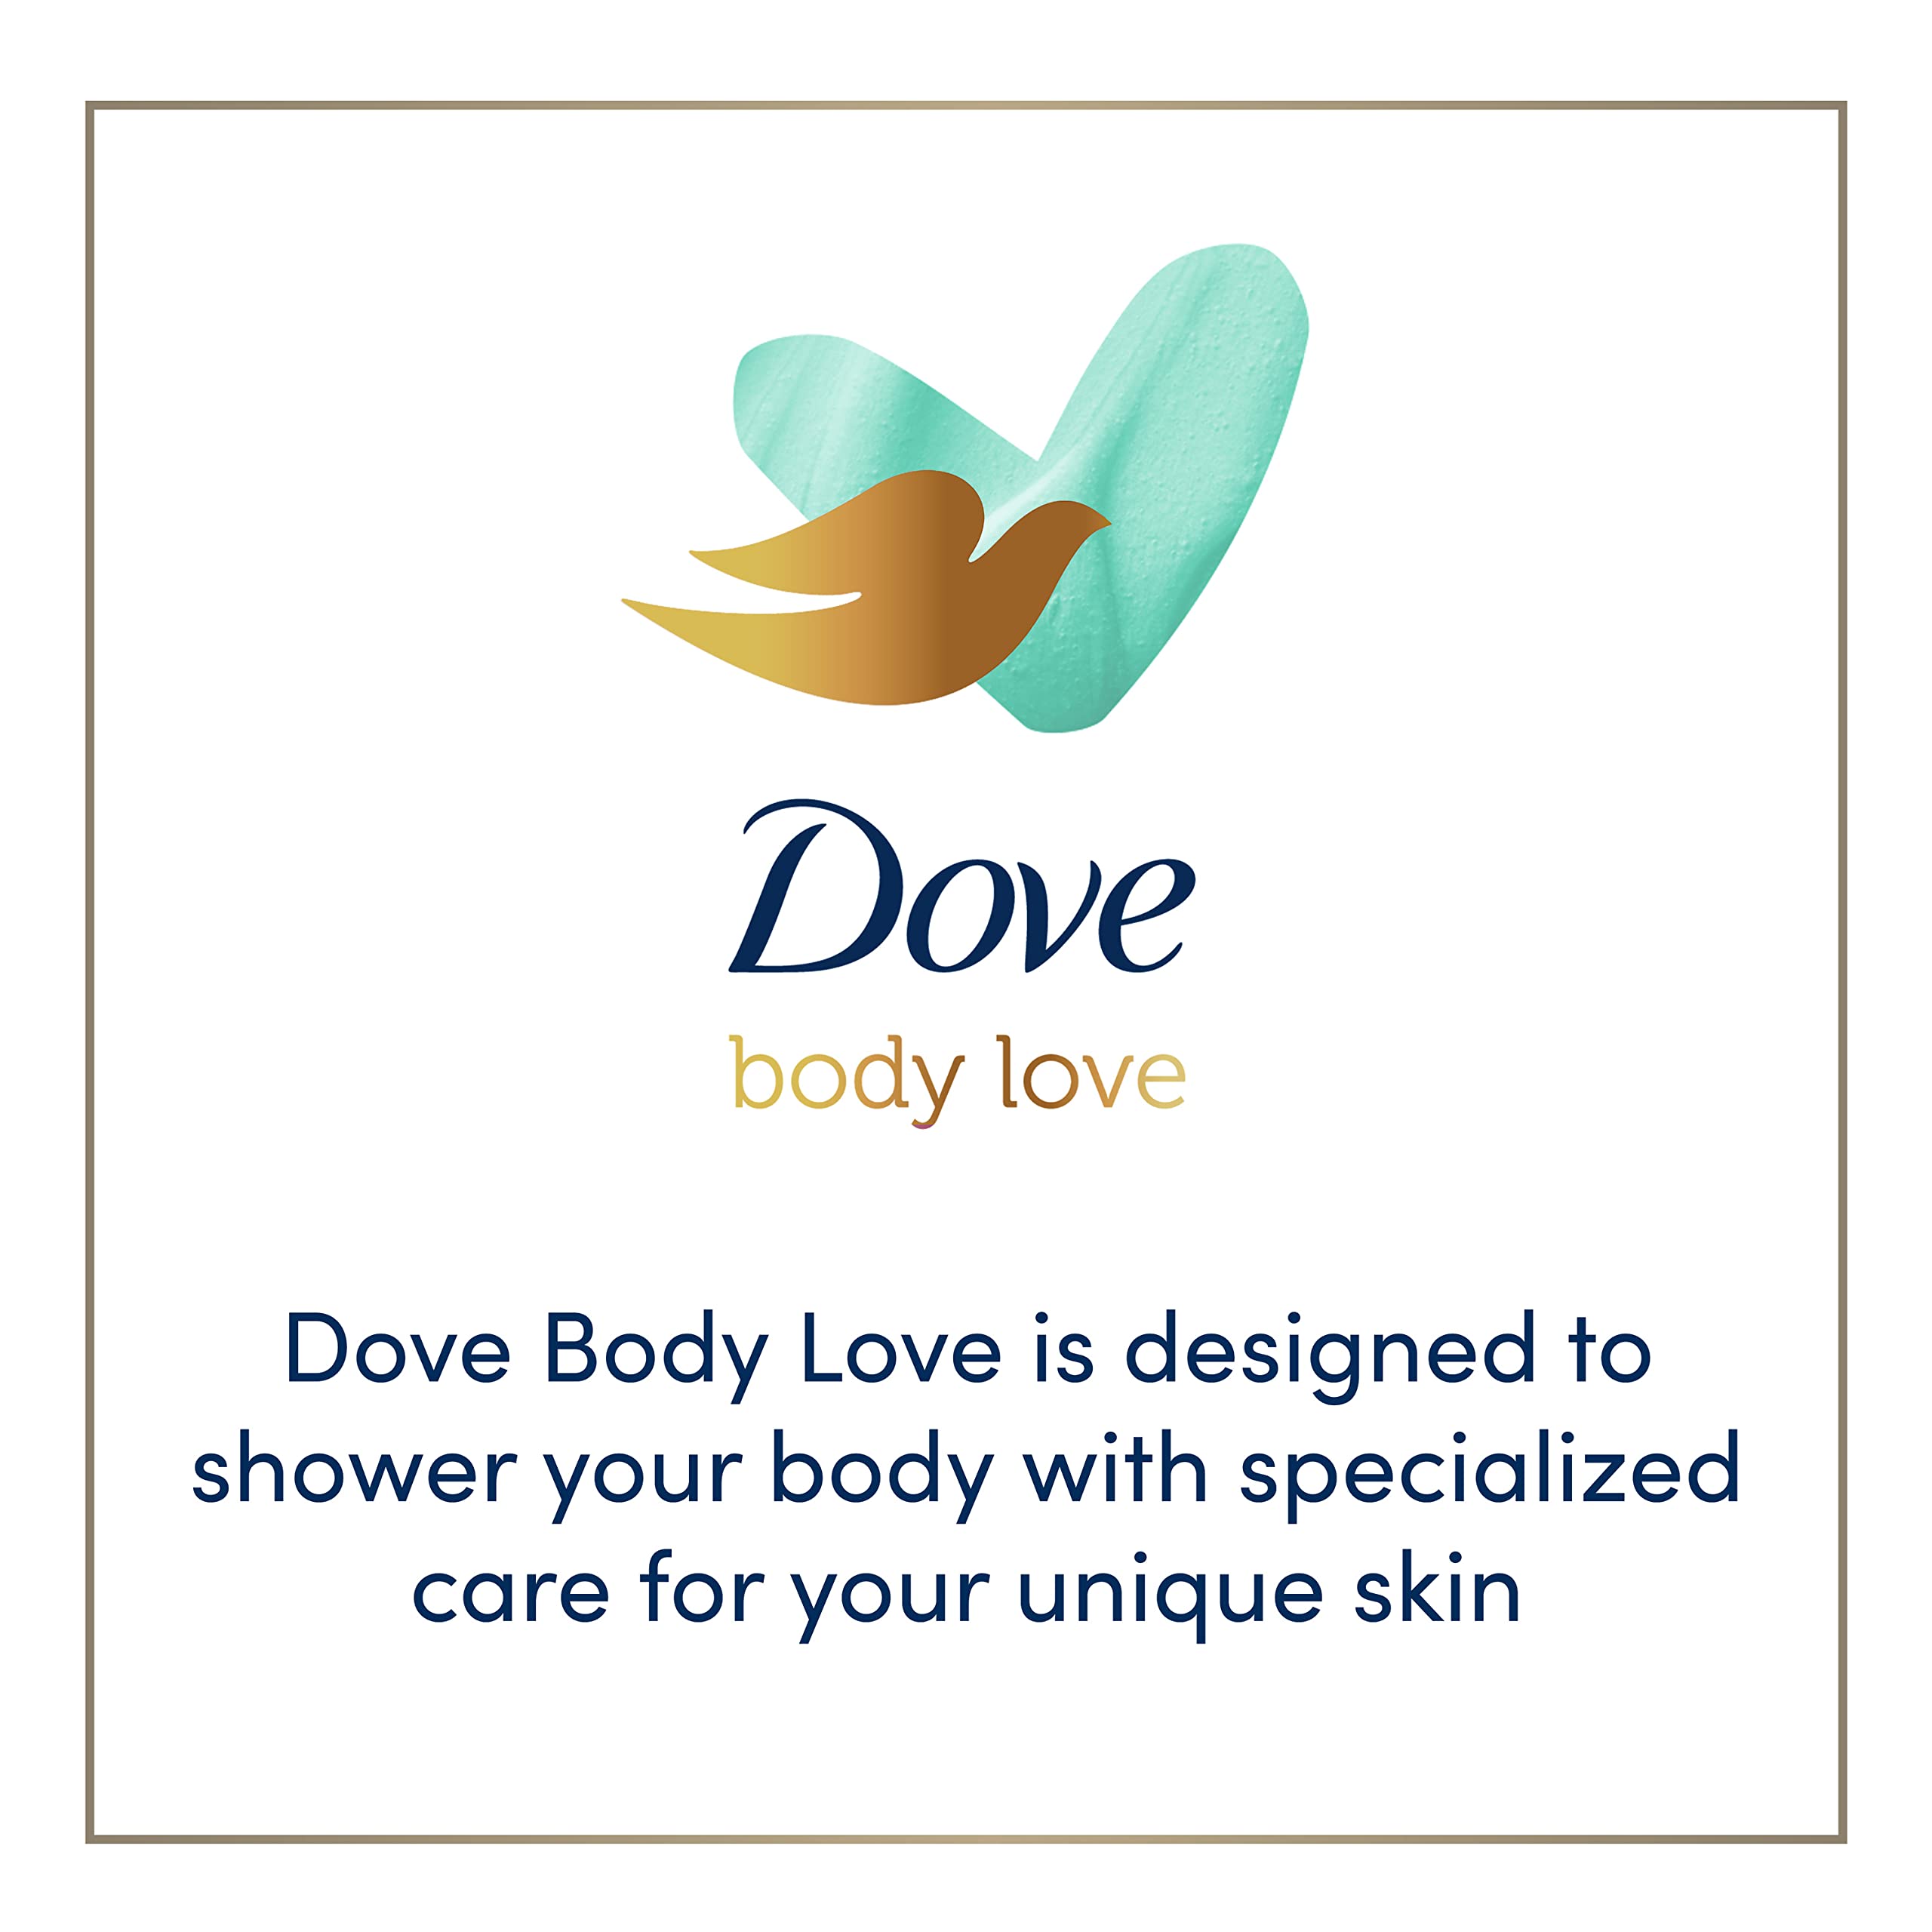 Dove Body Love Body Polish Exfoliate Away 3 Count for Rough, Bumpy Skin Body Scrub with AHAs for Silky Smooth Skin 12 oz